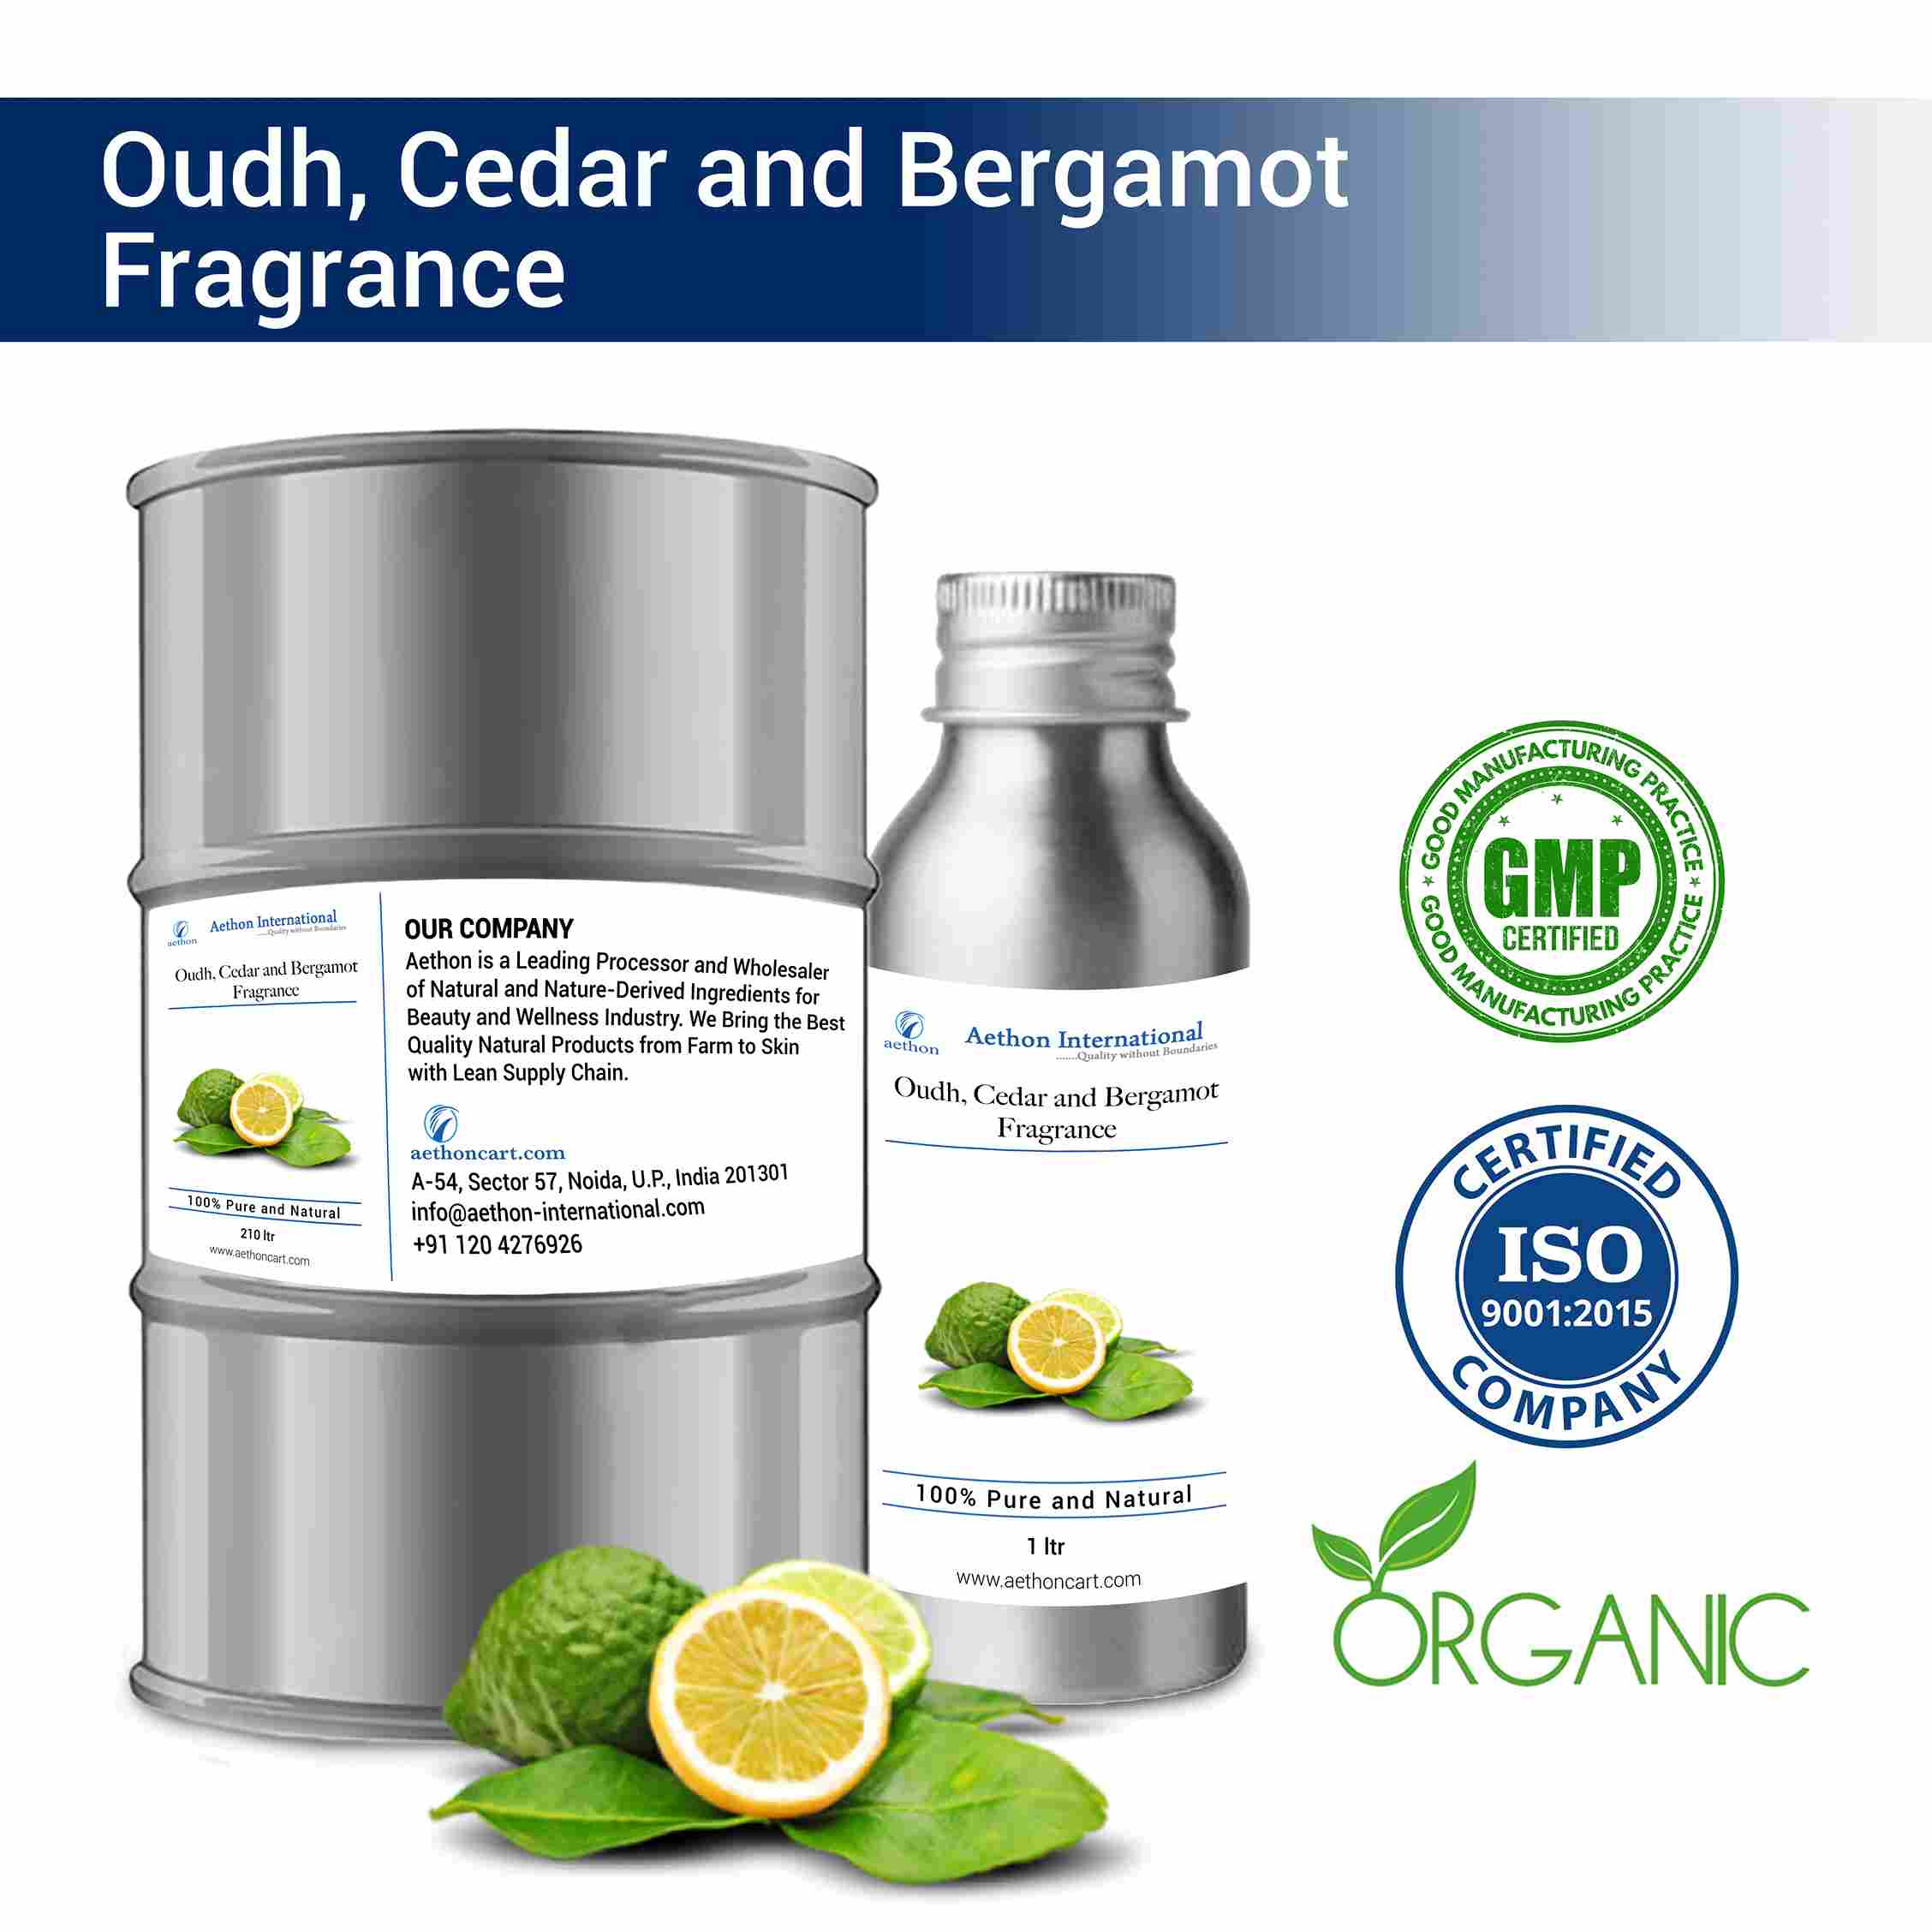 Oudh, Cedar and Bergamot Fragrance